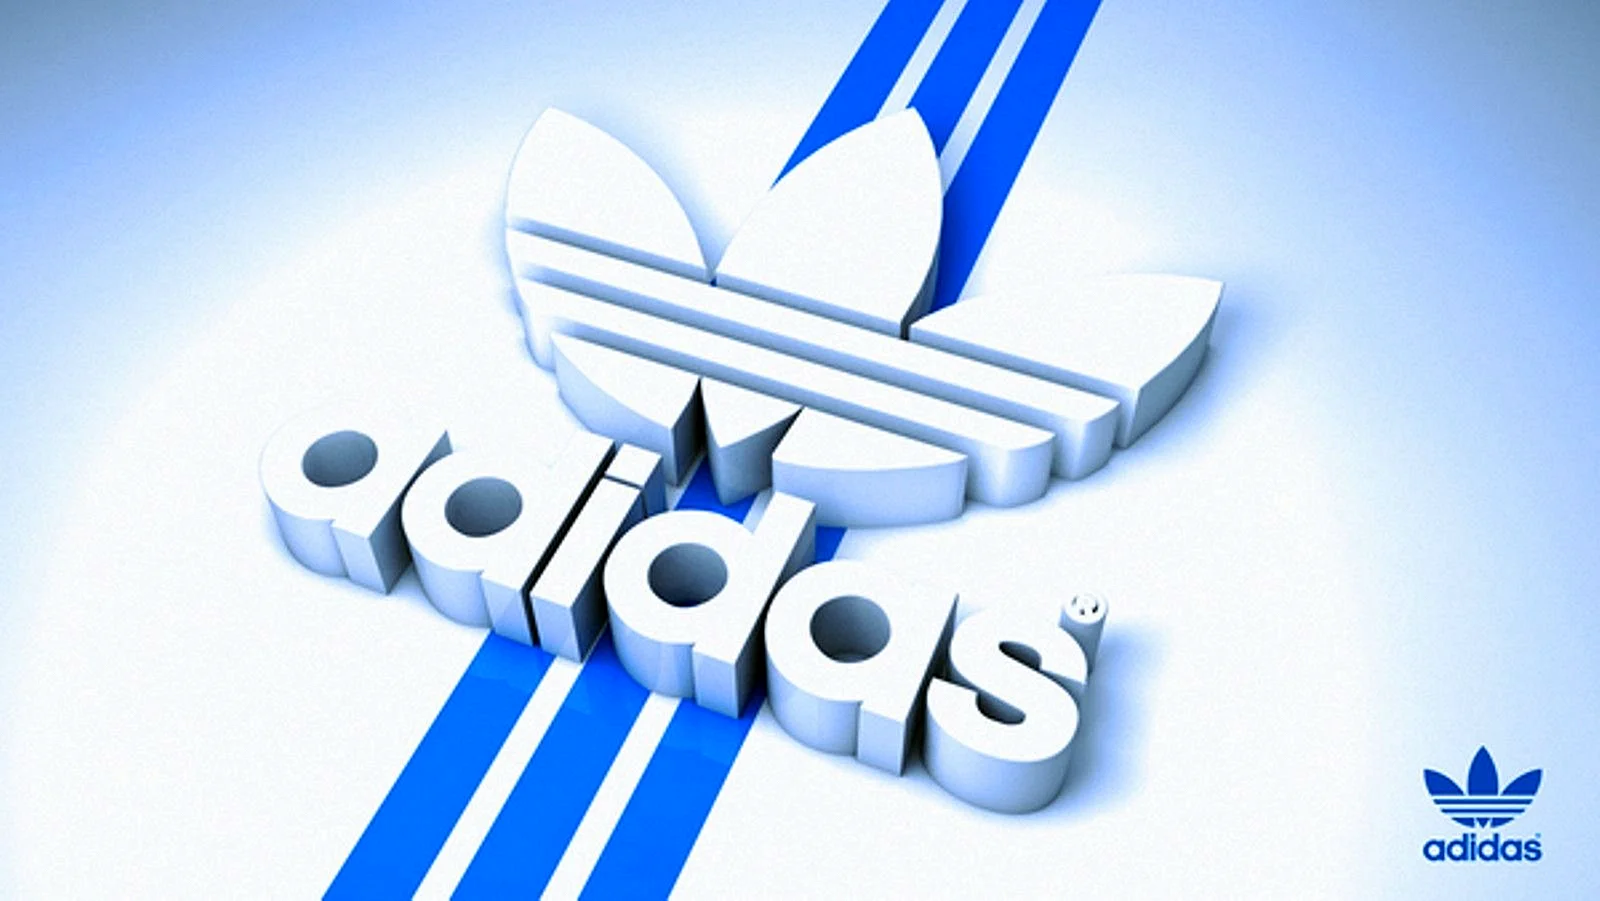 Adidas logo 3d